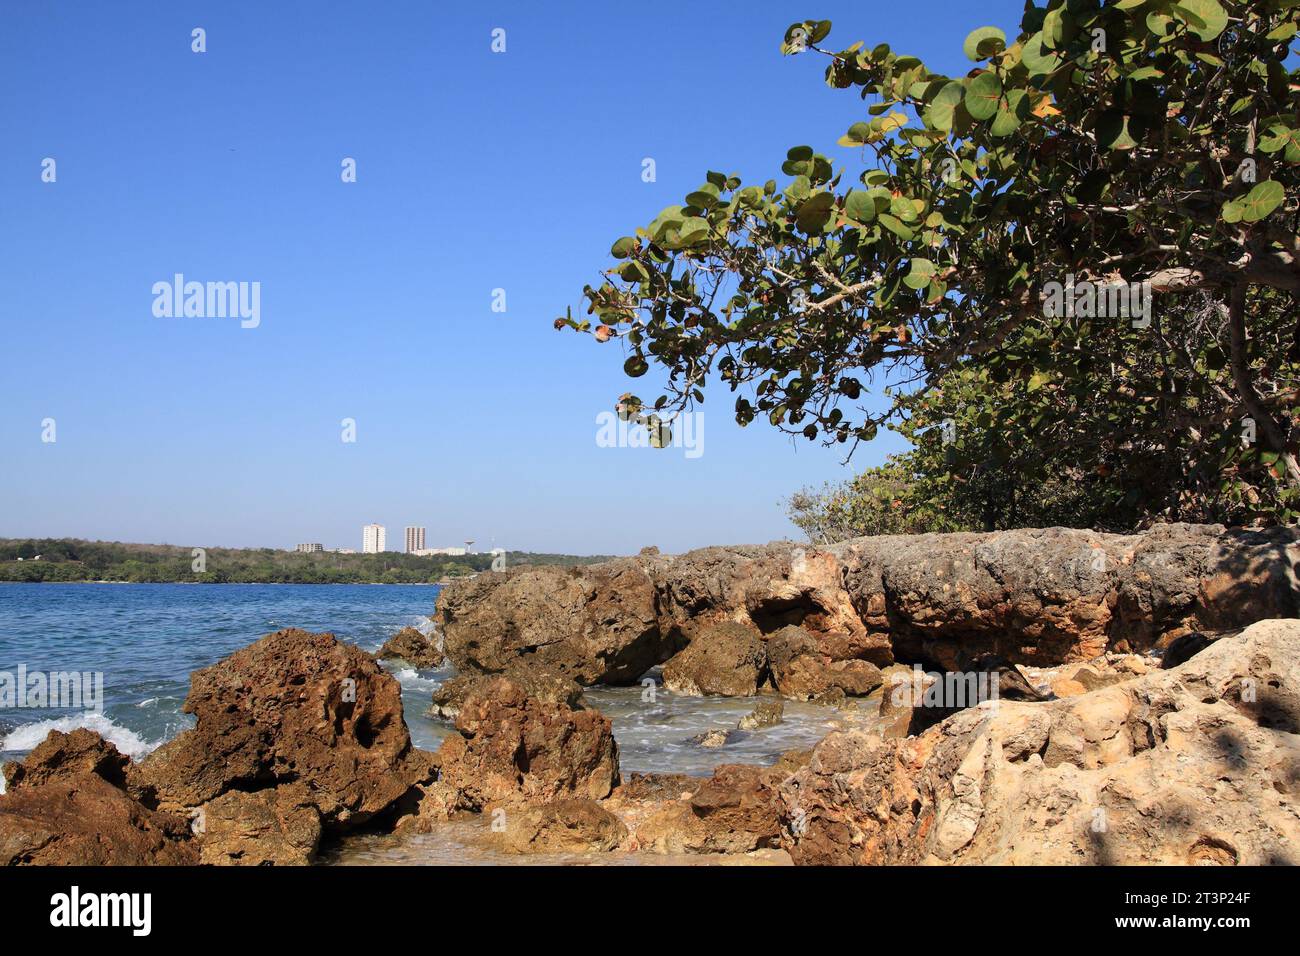 Coral rock coast in Cienfuegos, Cuba. Coccoloba uvifera trees, typical coastal species tolerant of salt. Stock Photo